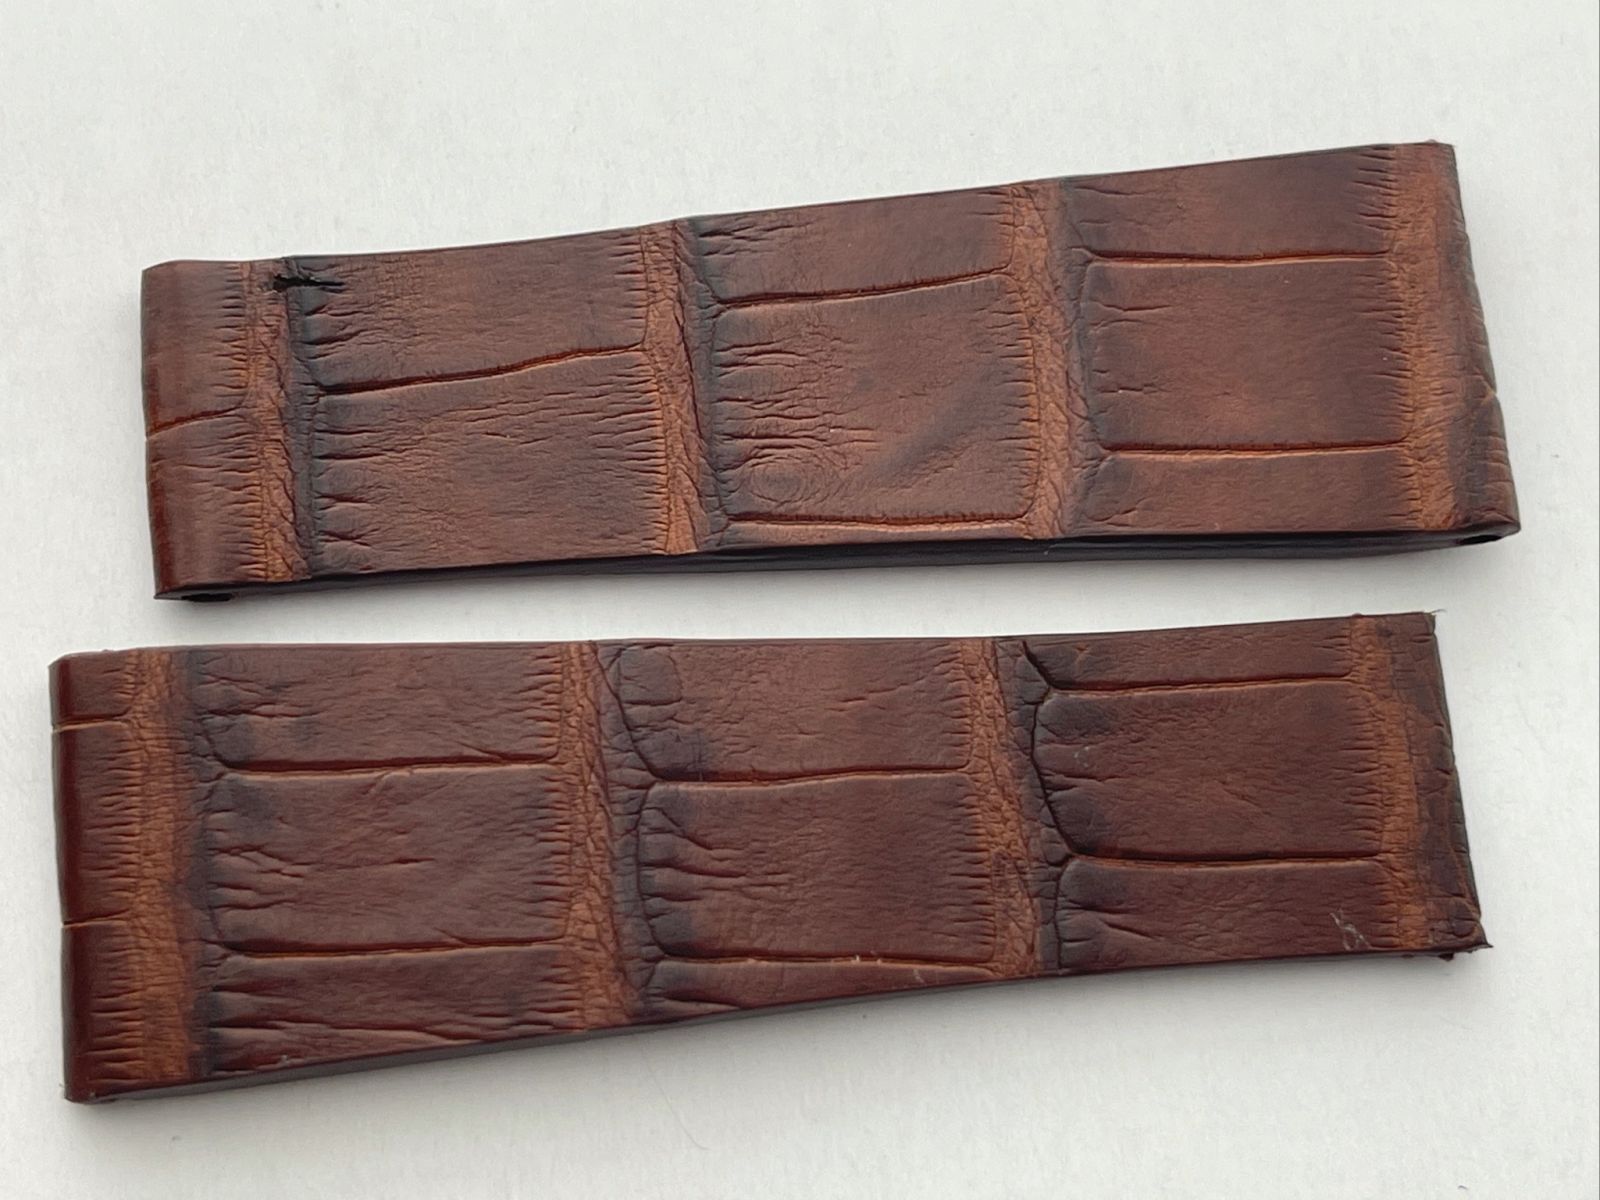 Rolex Cellini Prince style strap 20mm in Almond Brown Alligator leather